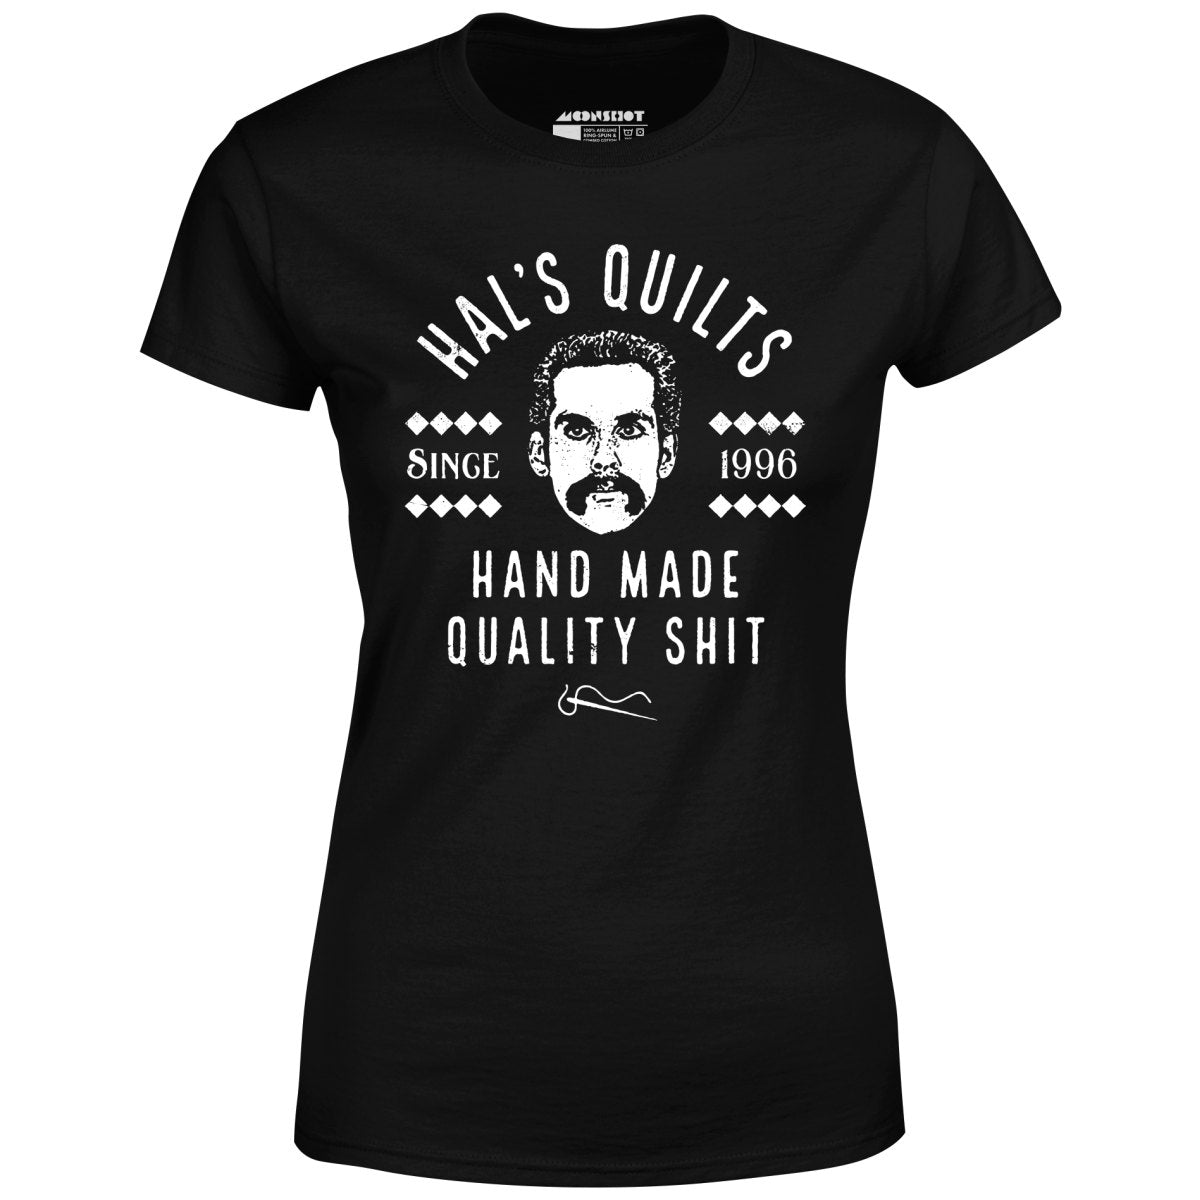 Hal's Quilts - Women's T-Shirt